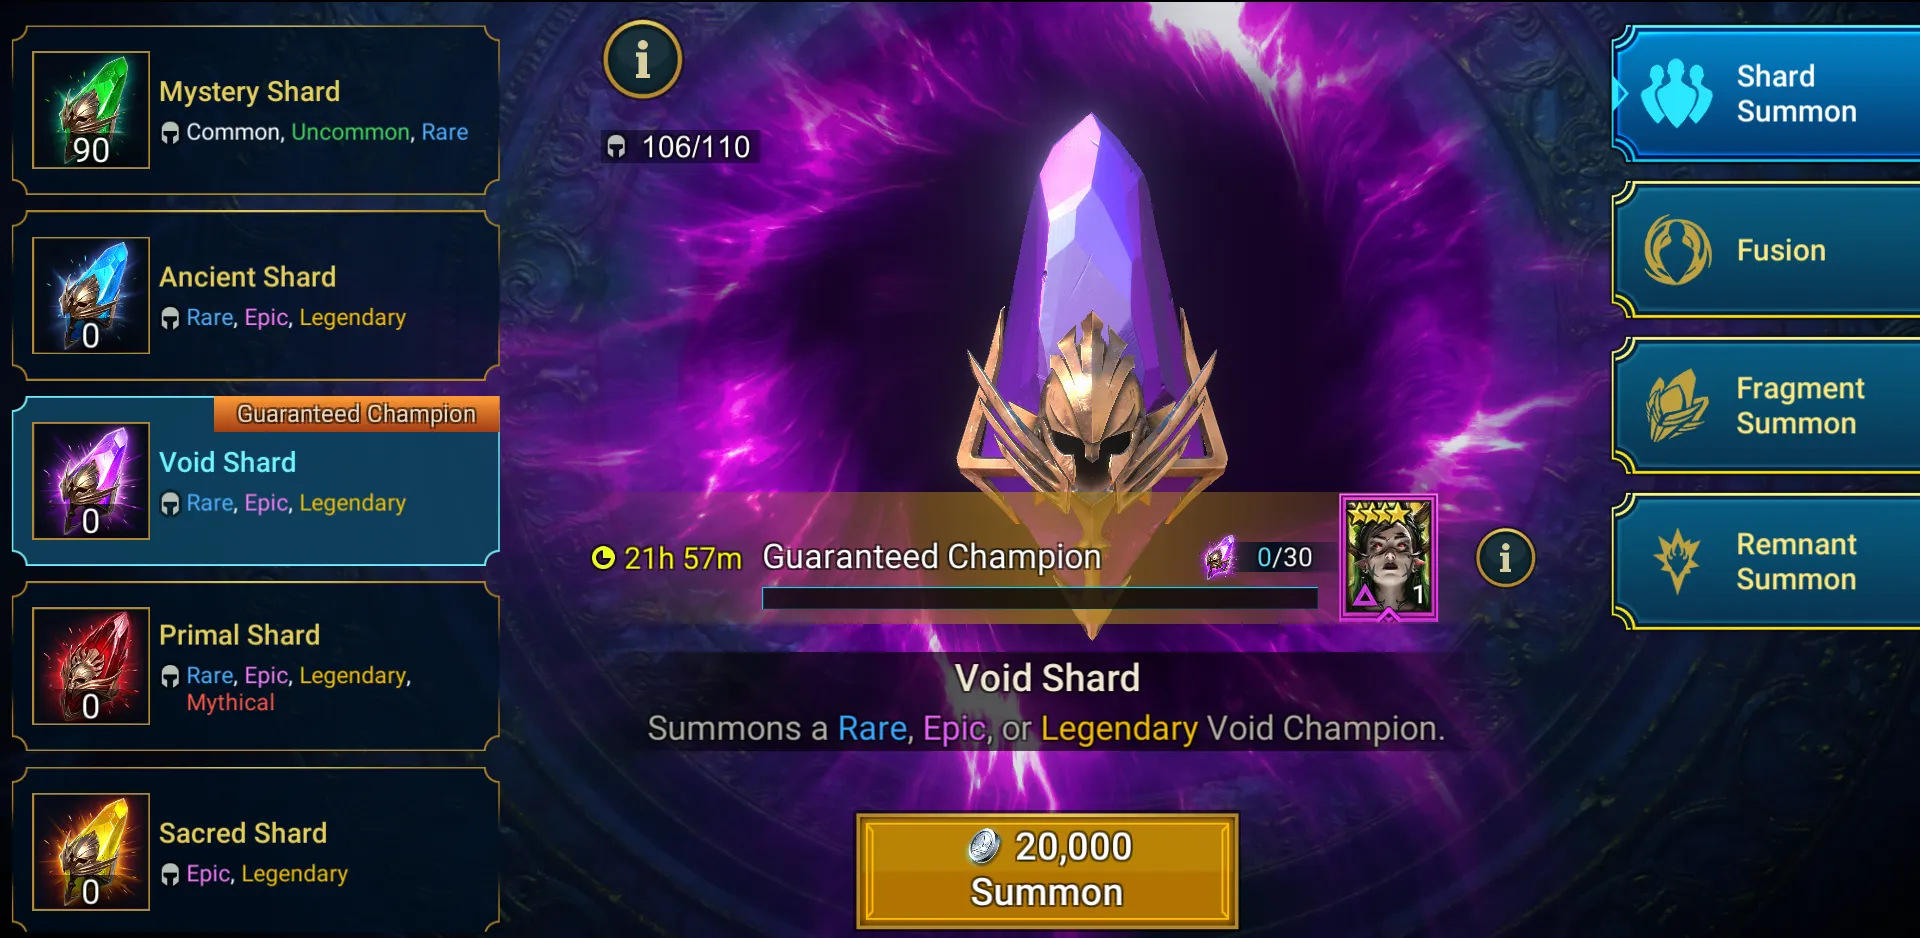 RAID Shadow Legends: Guaranteed Champion Event - Full Explanation